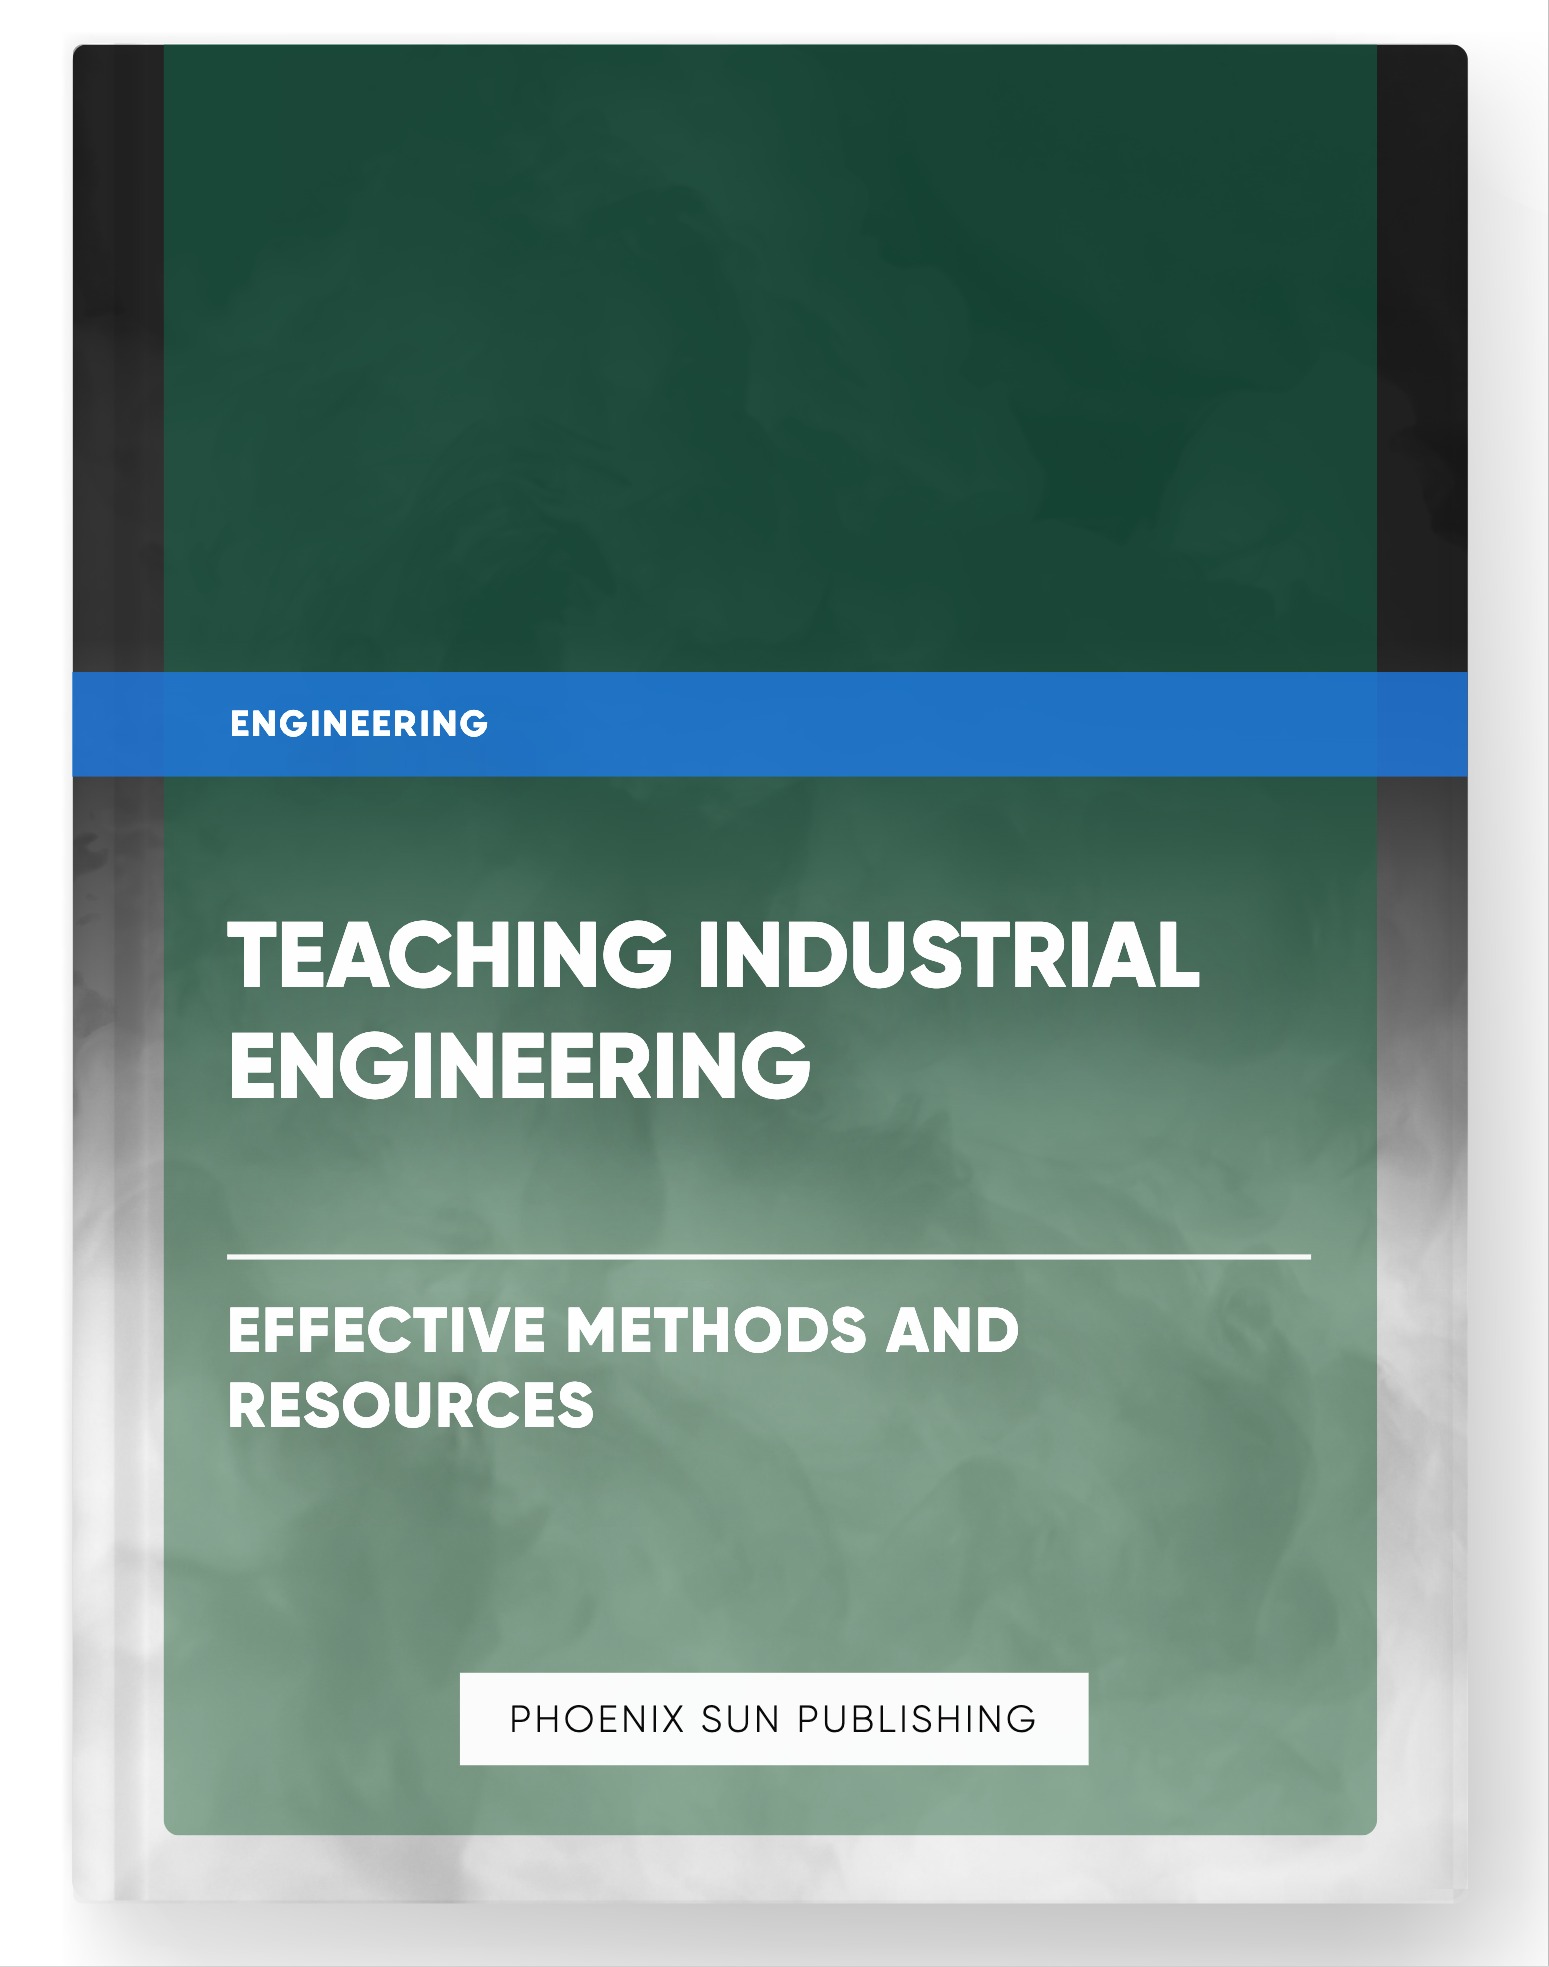 Teaching Industrial Engineering – Effective Methods and Resources